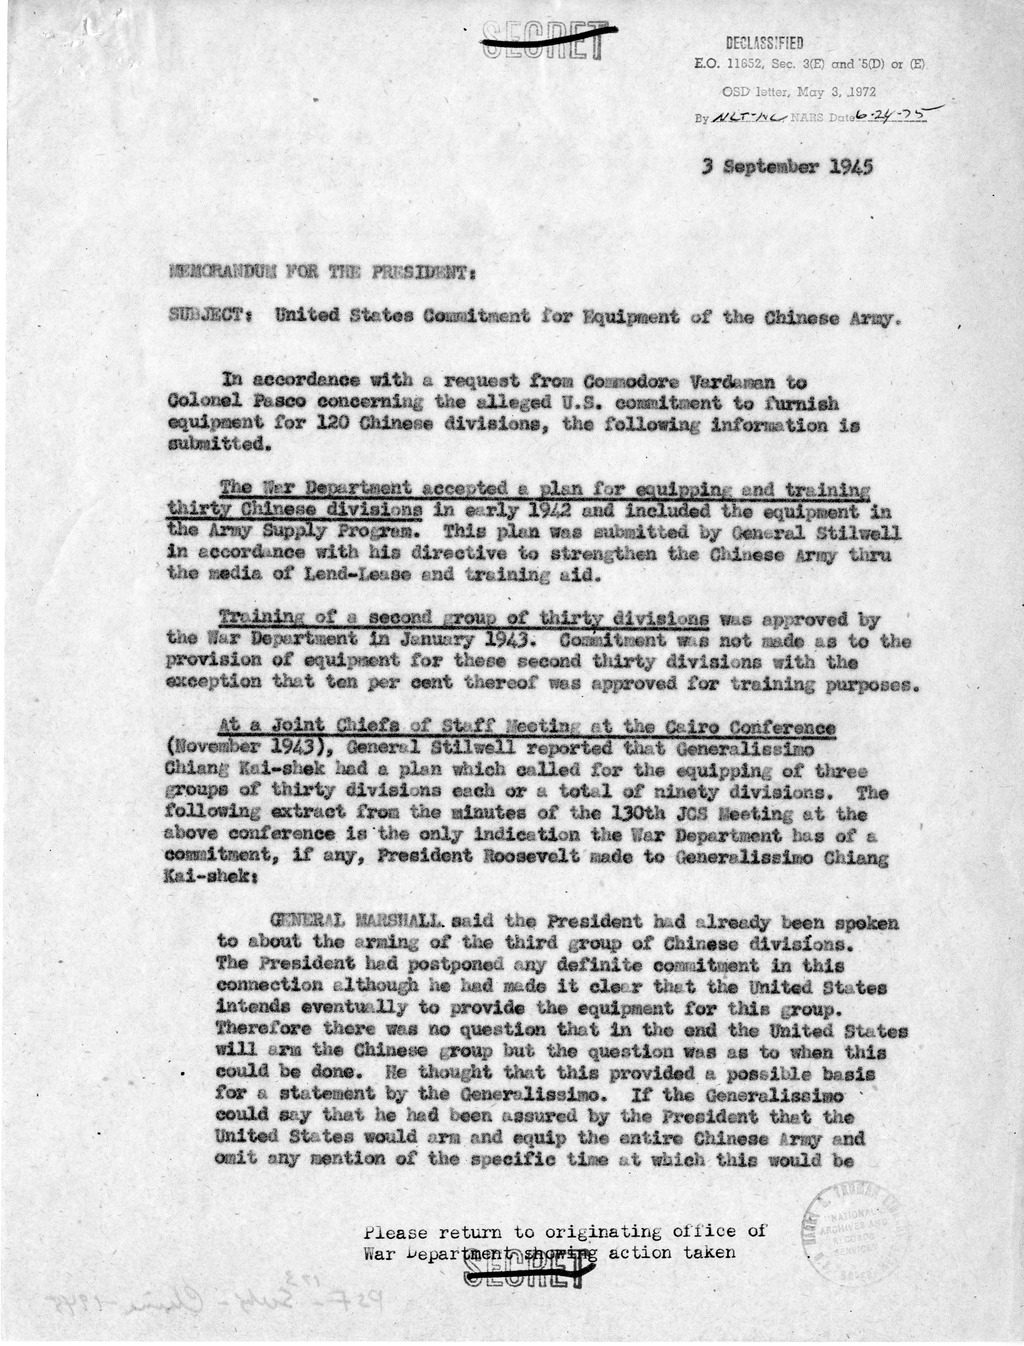 Memorandum from Lieutenant General J. E. Hull to President Harry S. Truman